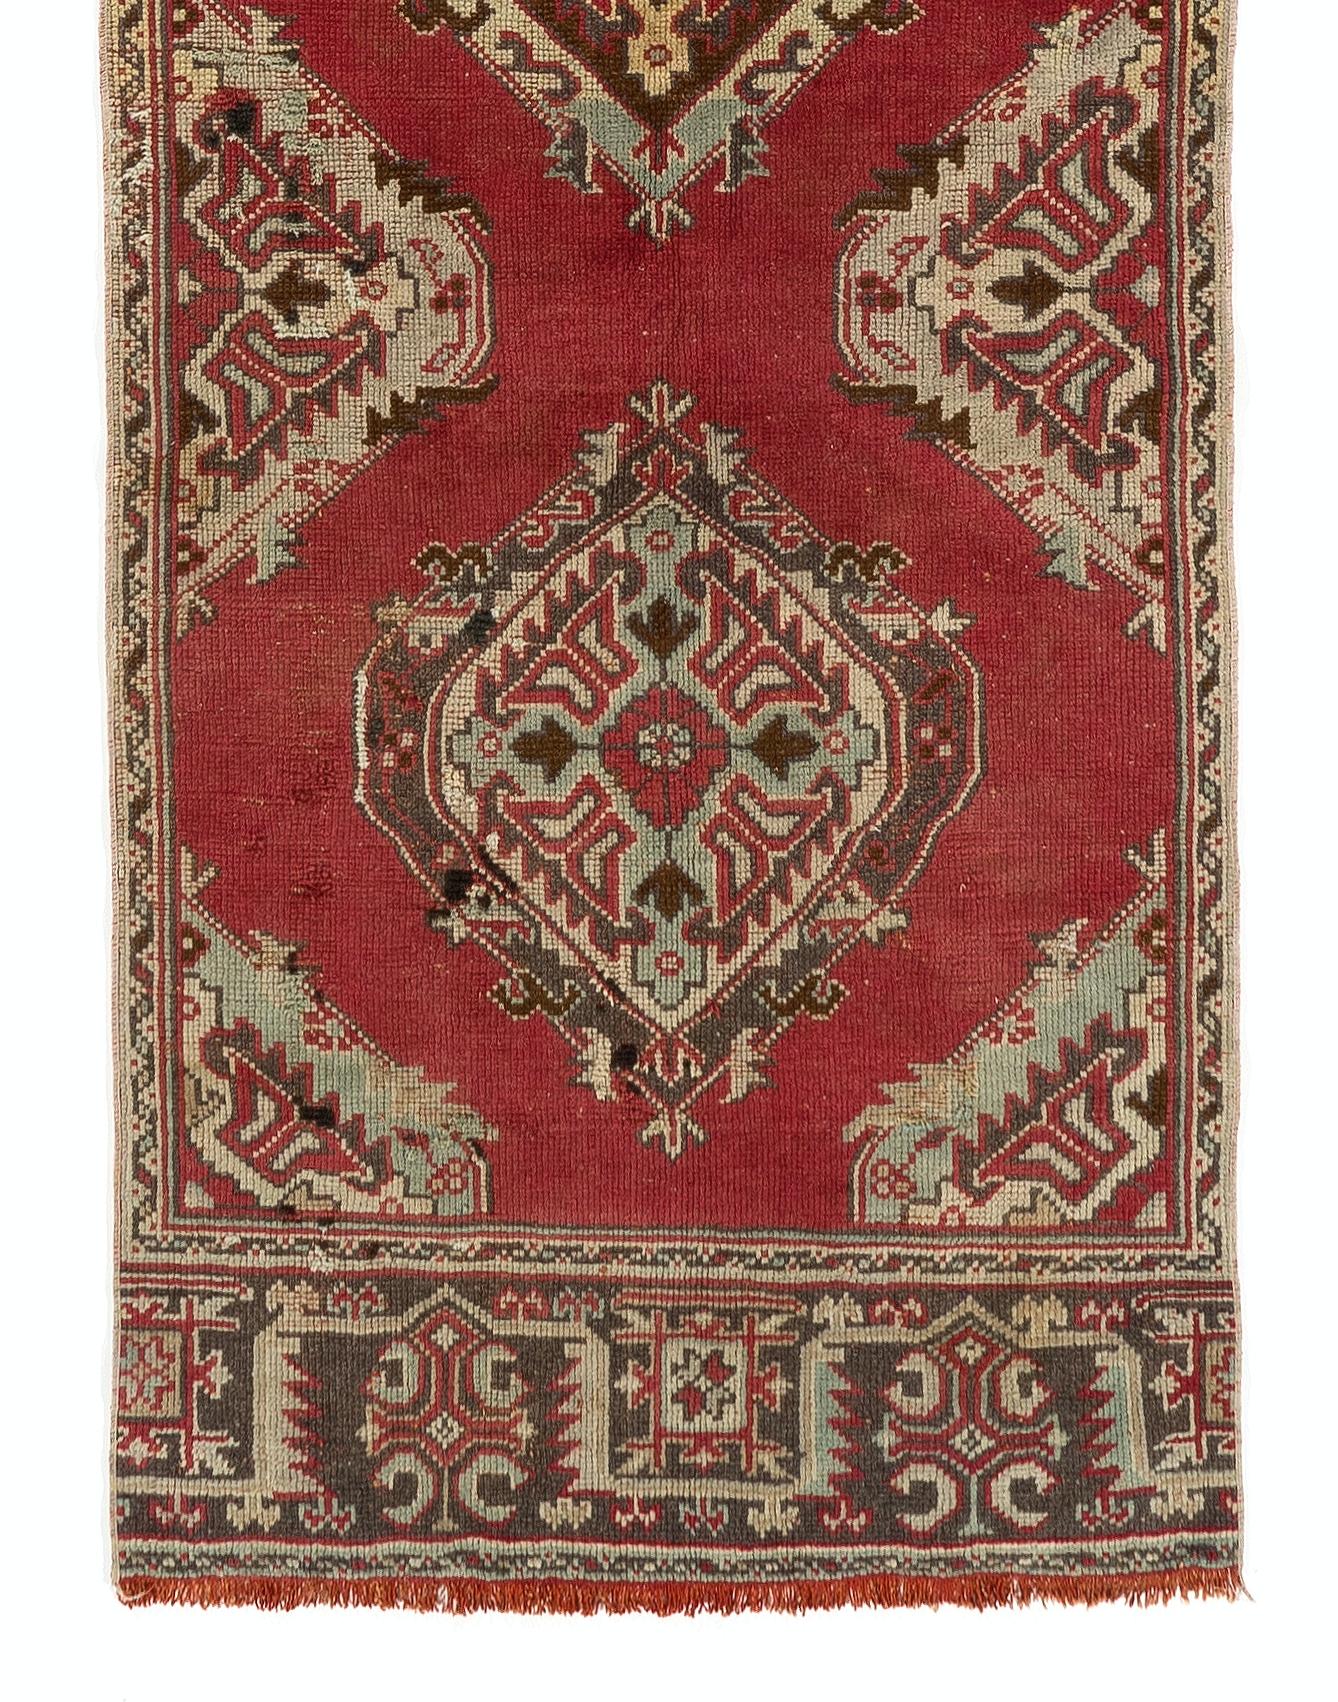 Hand-Knotted Vintage Turkish Handmade Hallway Runner in Brick Red, 100% Wool Rug For Sale